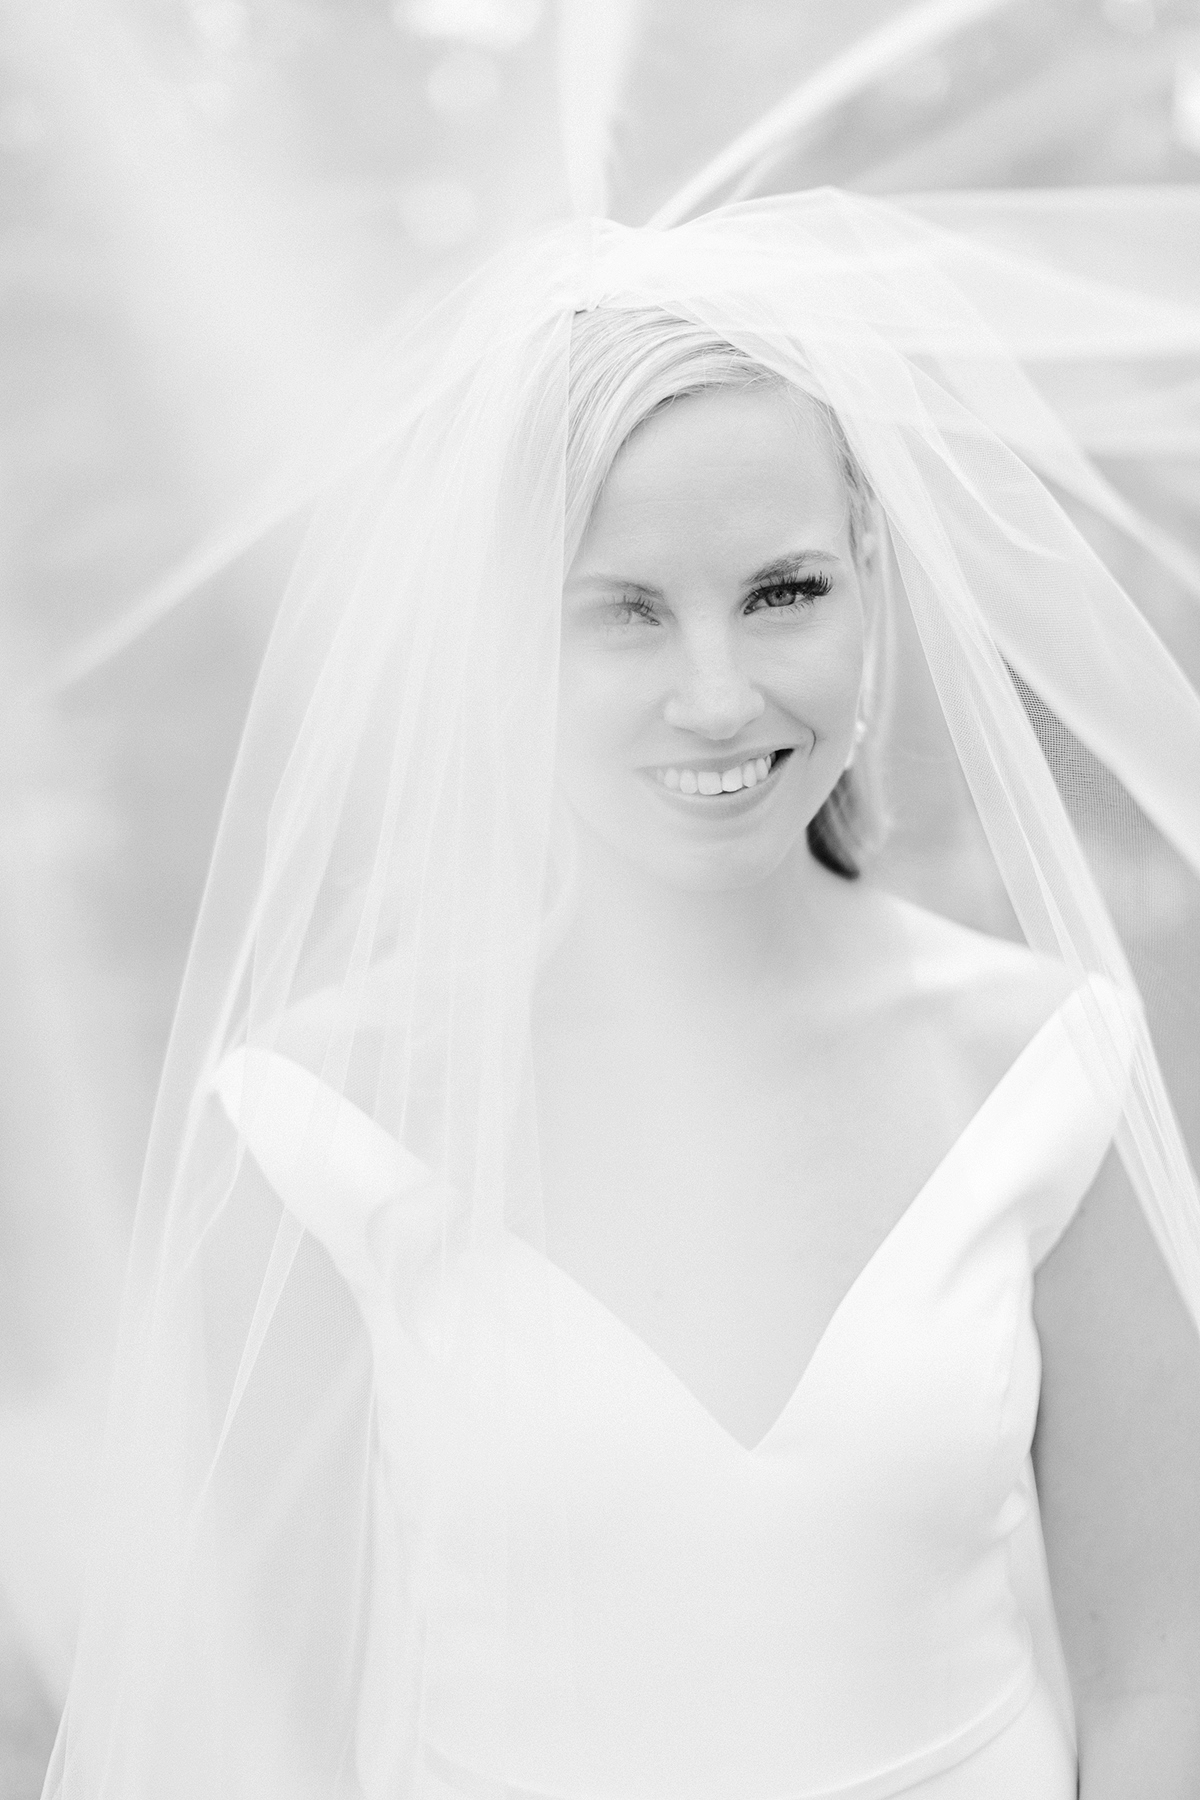 Minneapolis wedding photography by film photographer, Laura Ivanova